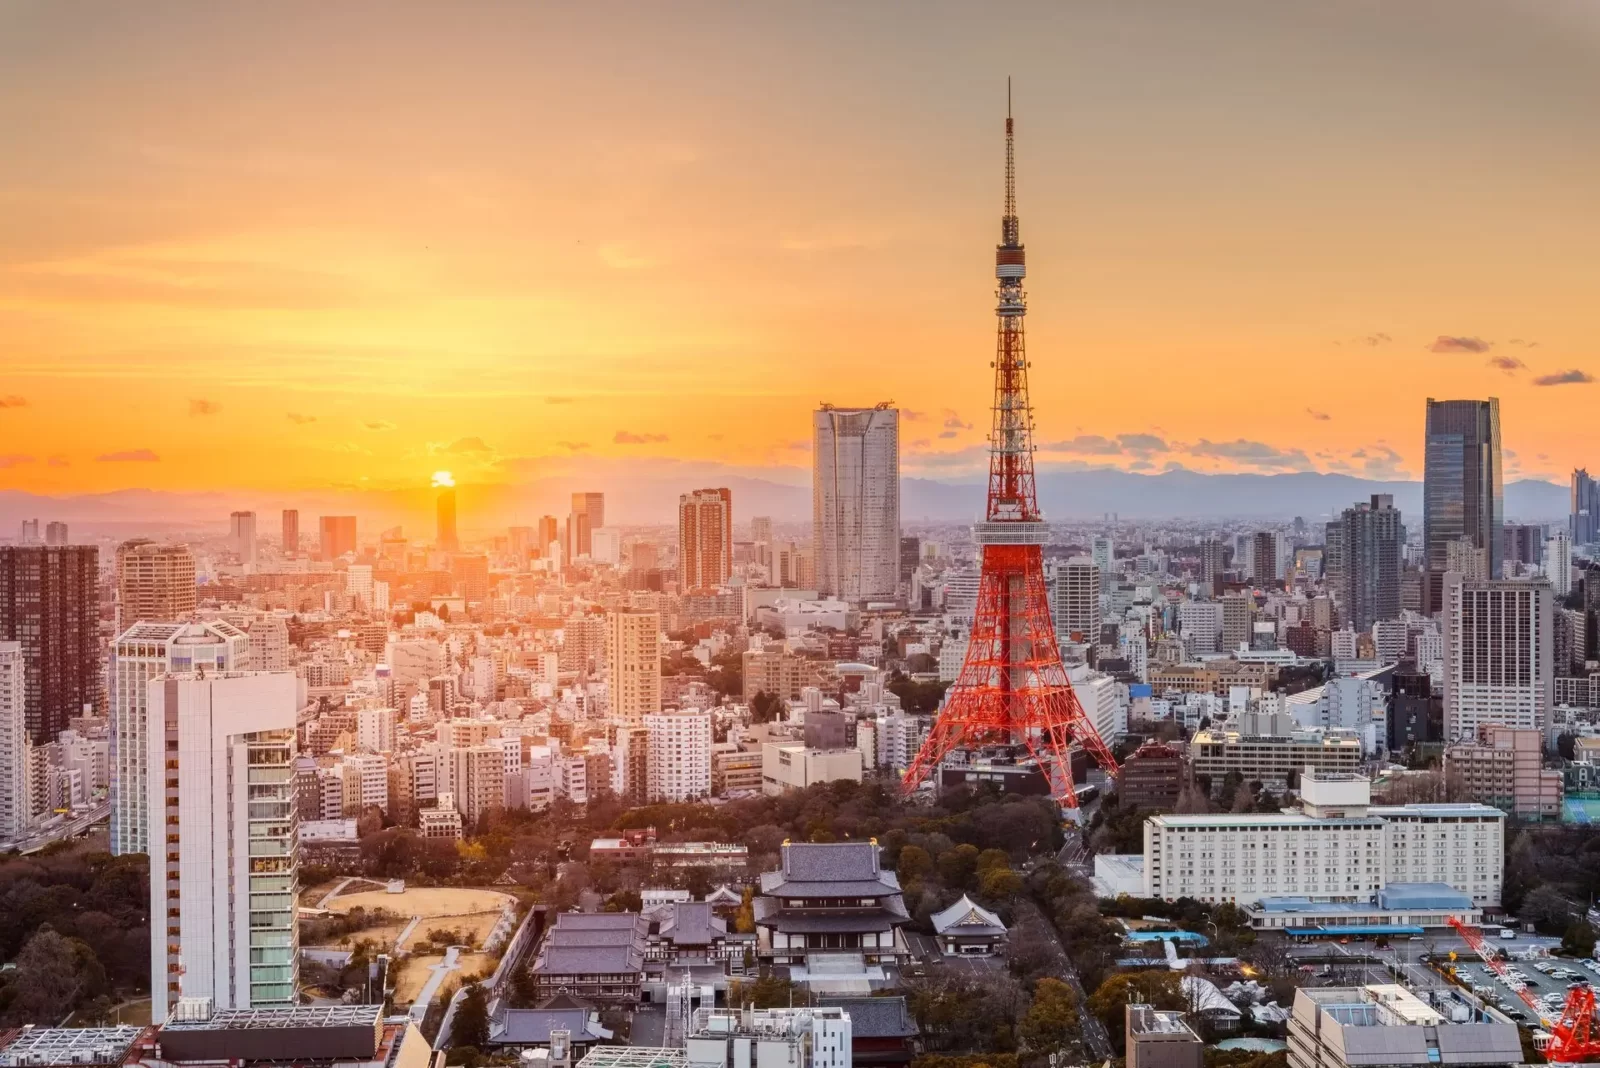 Sunset at Tokyo, Japan